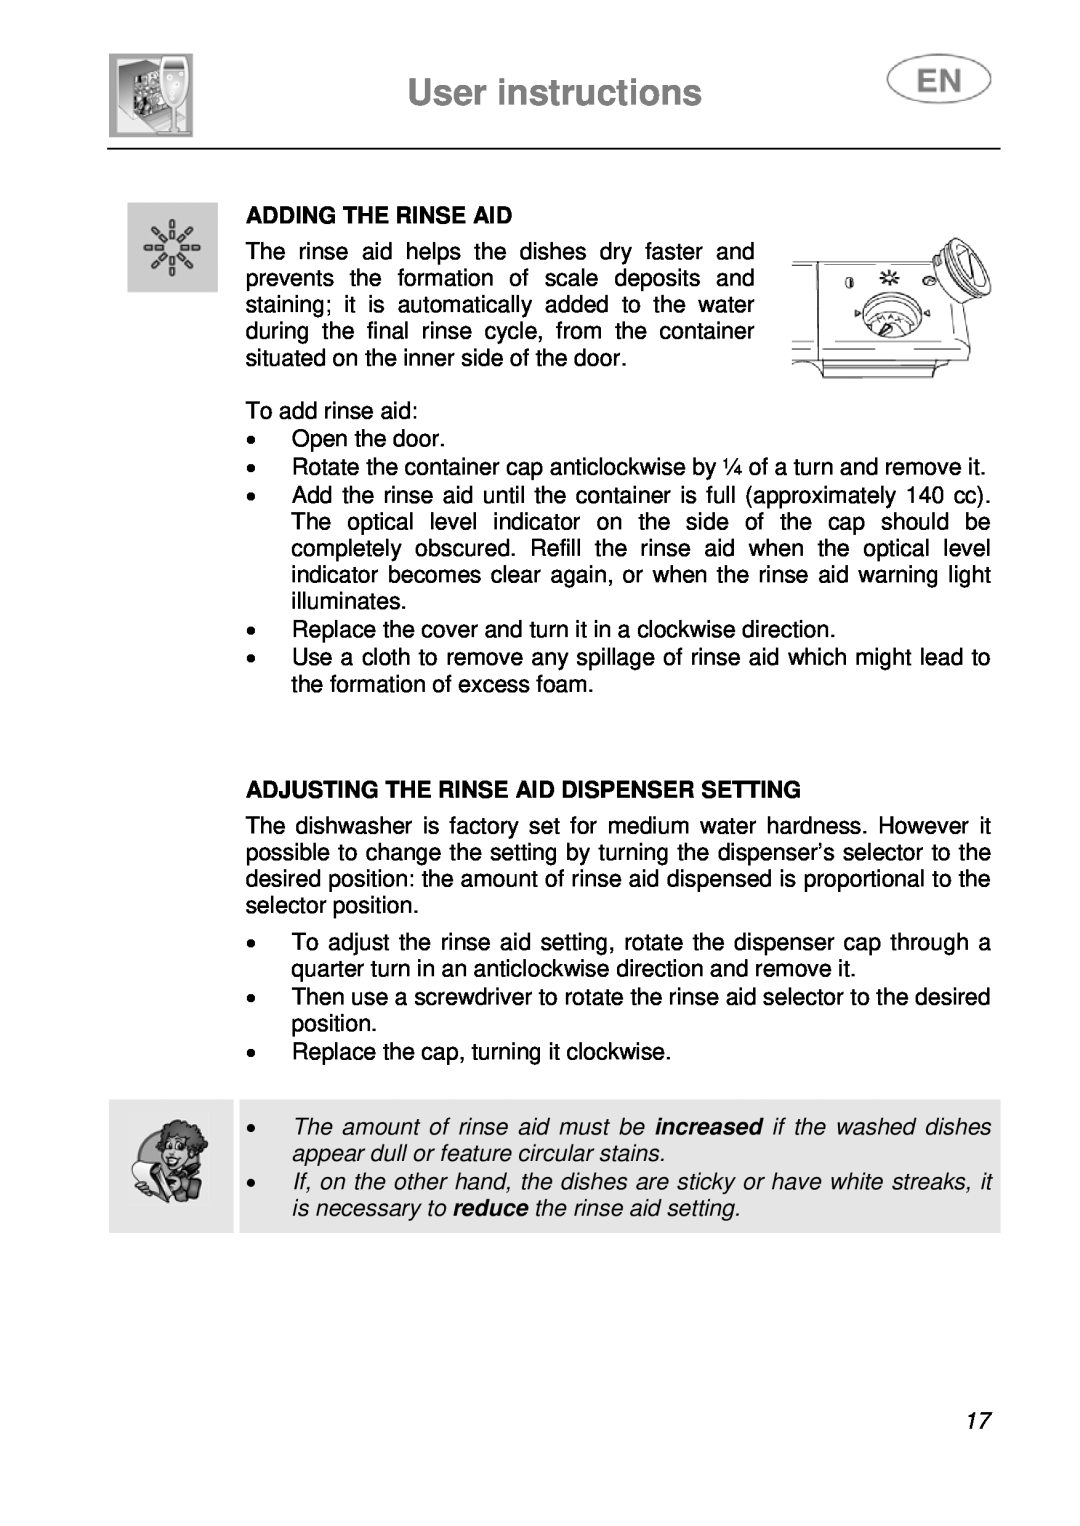 CDA WC460 manual User instructions, Adding The Rinse Aid, Adjusting The Rinse Aid Dispenser Setting 